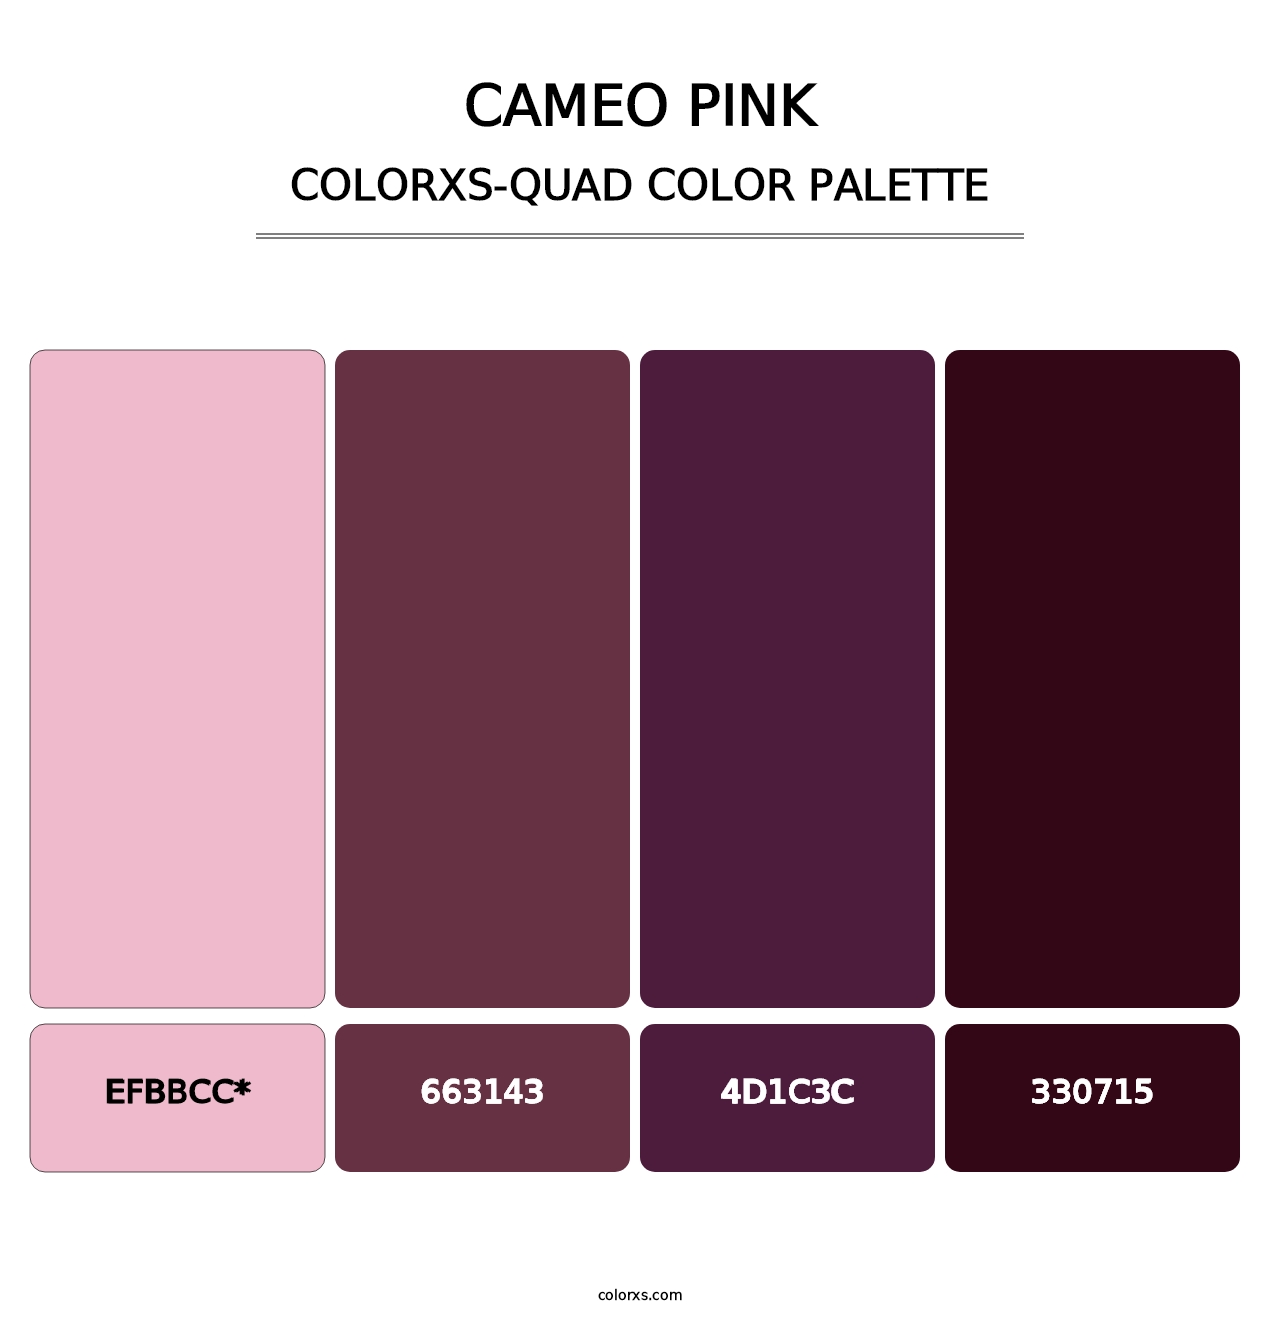 Cameo Pink - Colorxs Quad Palette